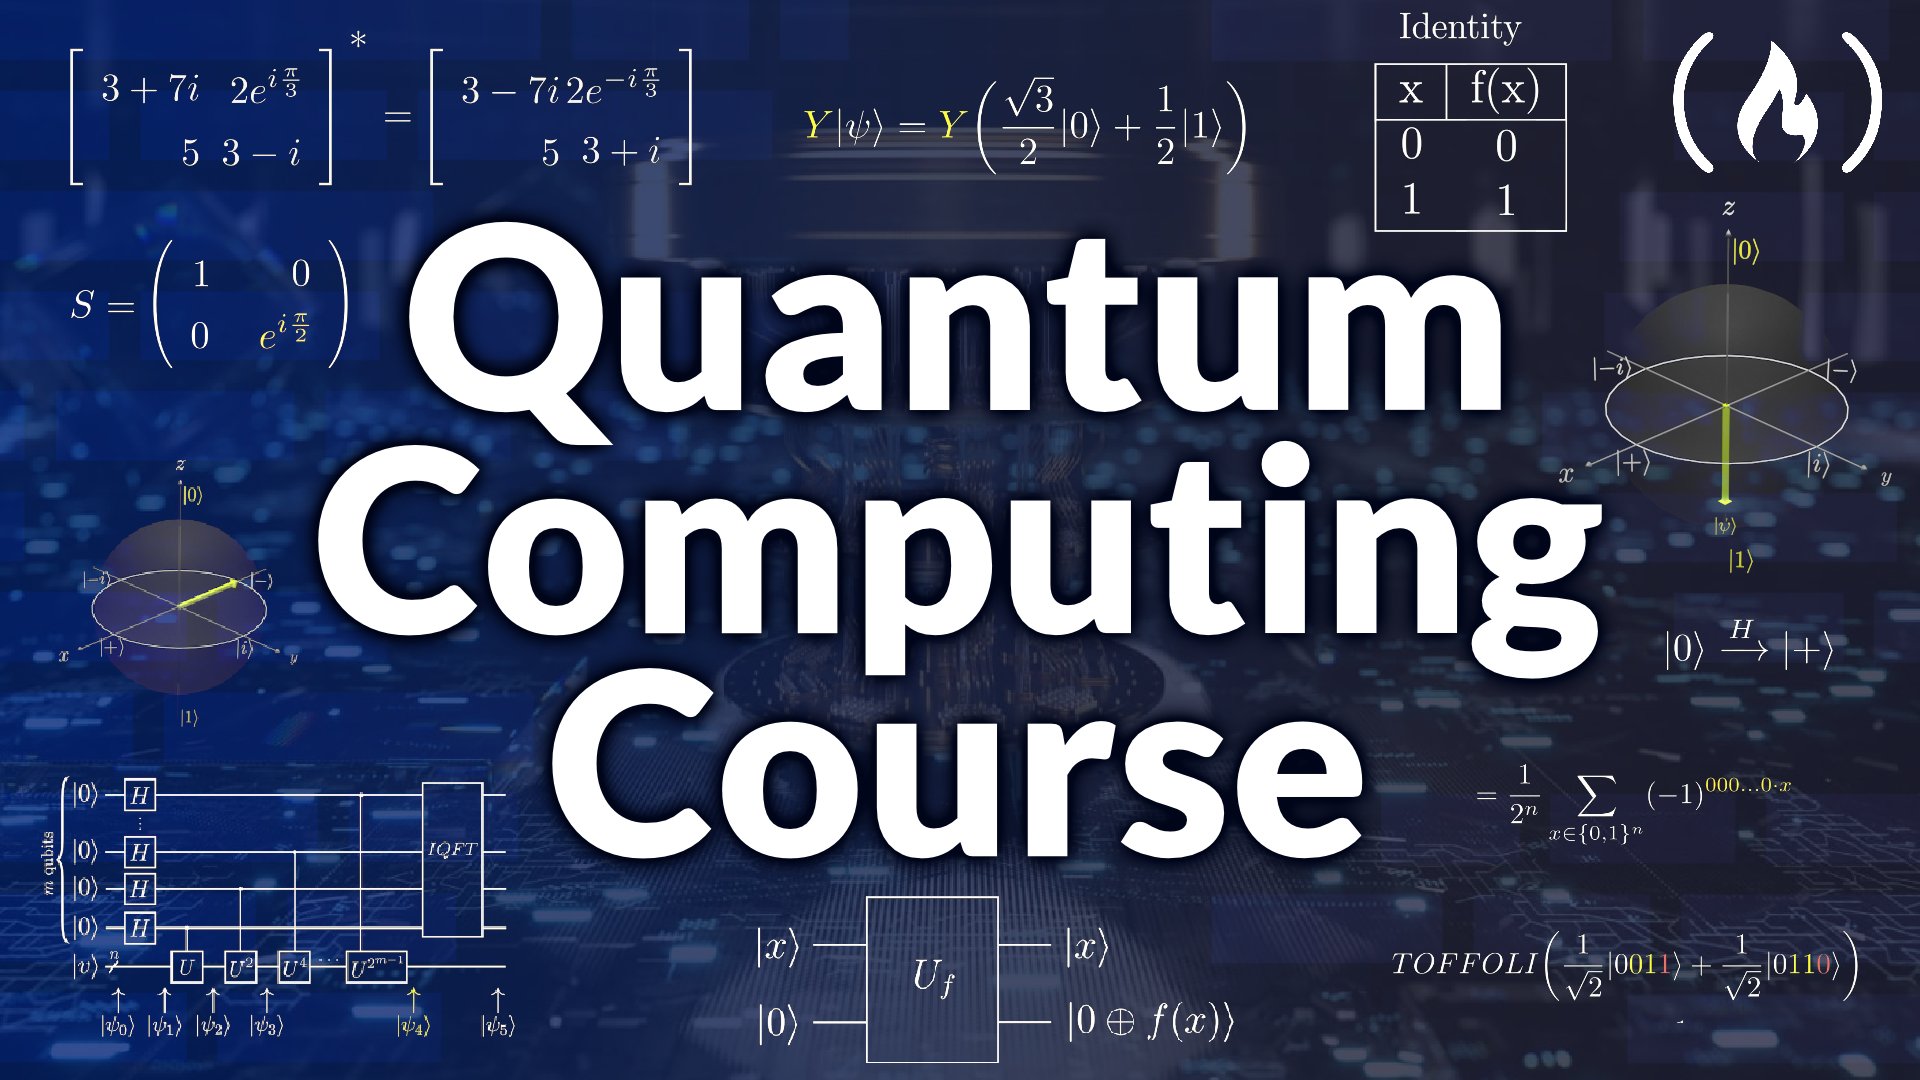 Learn the Algorithms Behind Quantum Computing